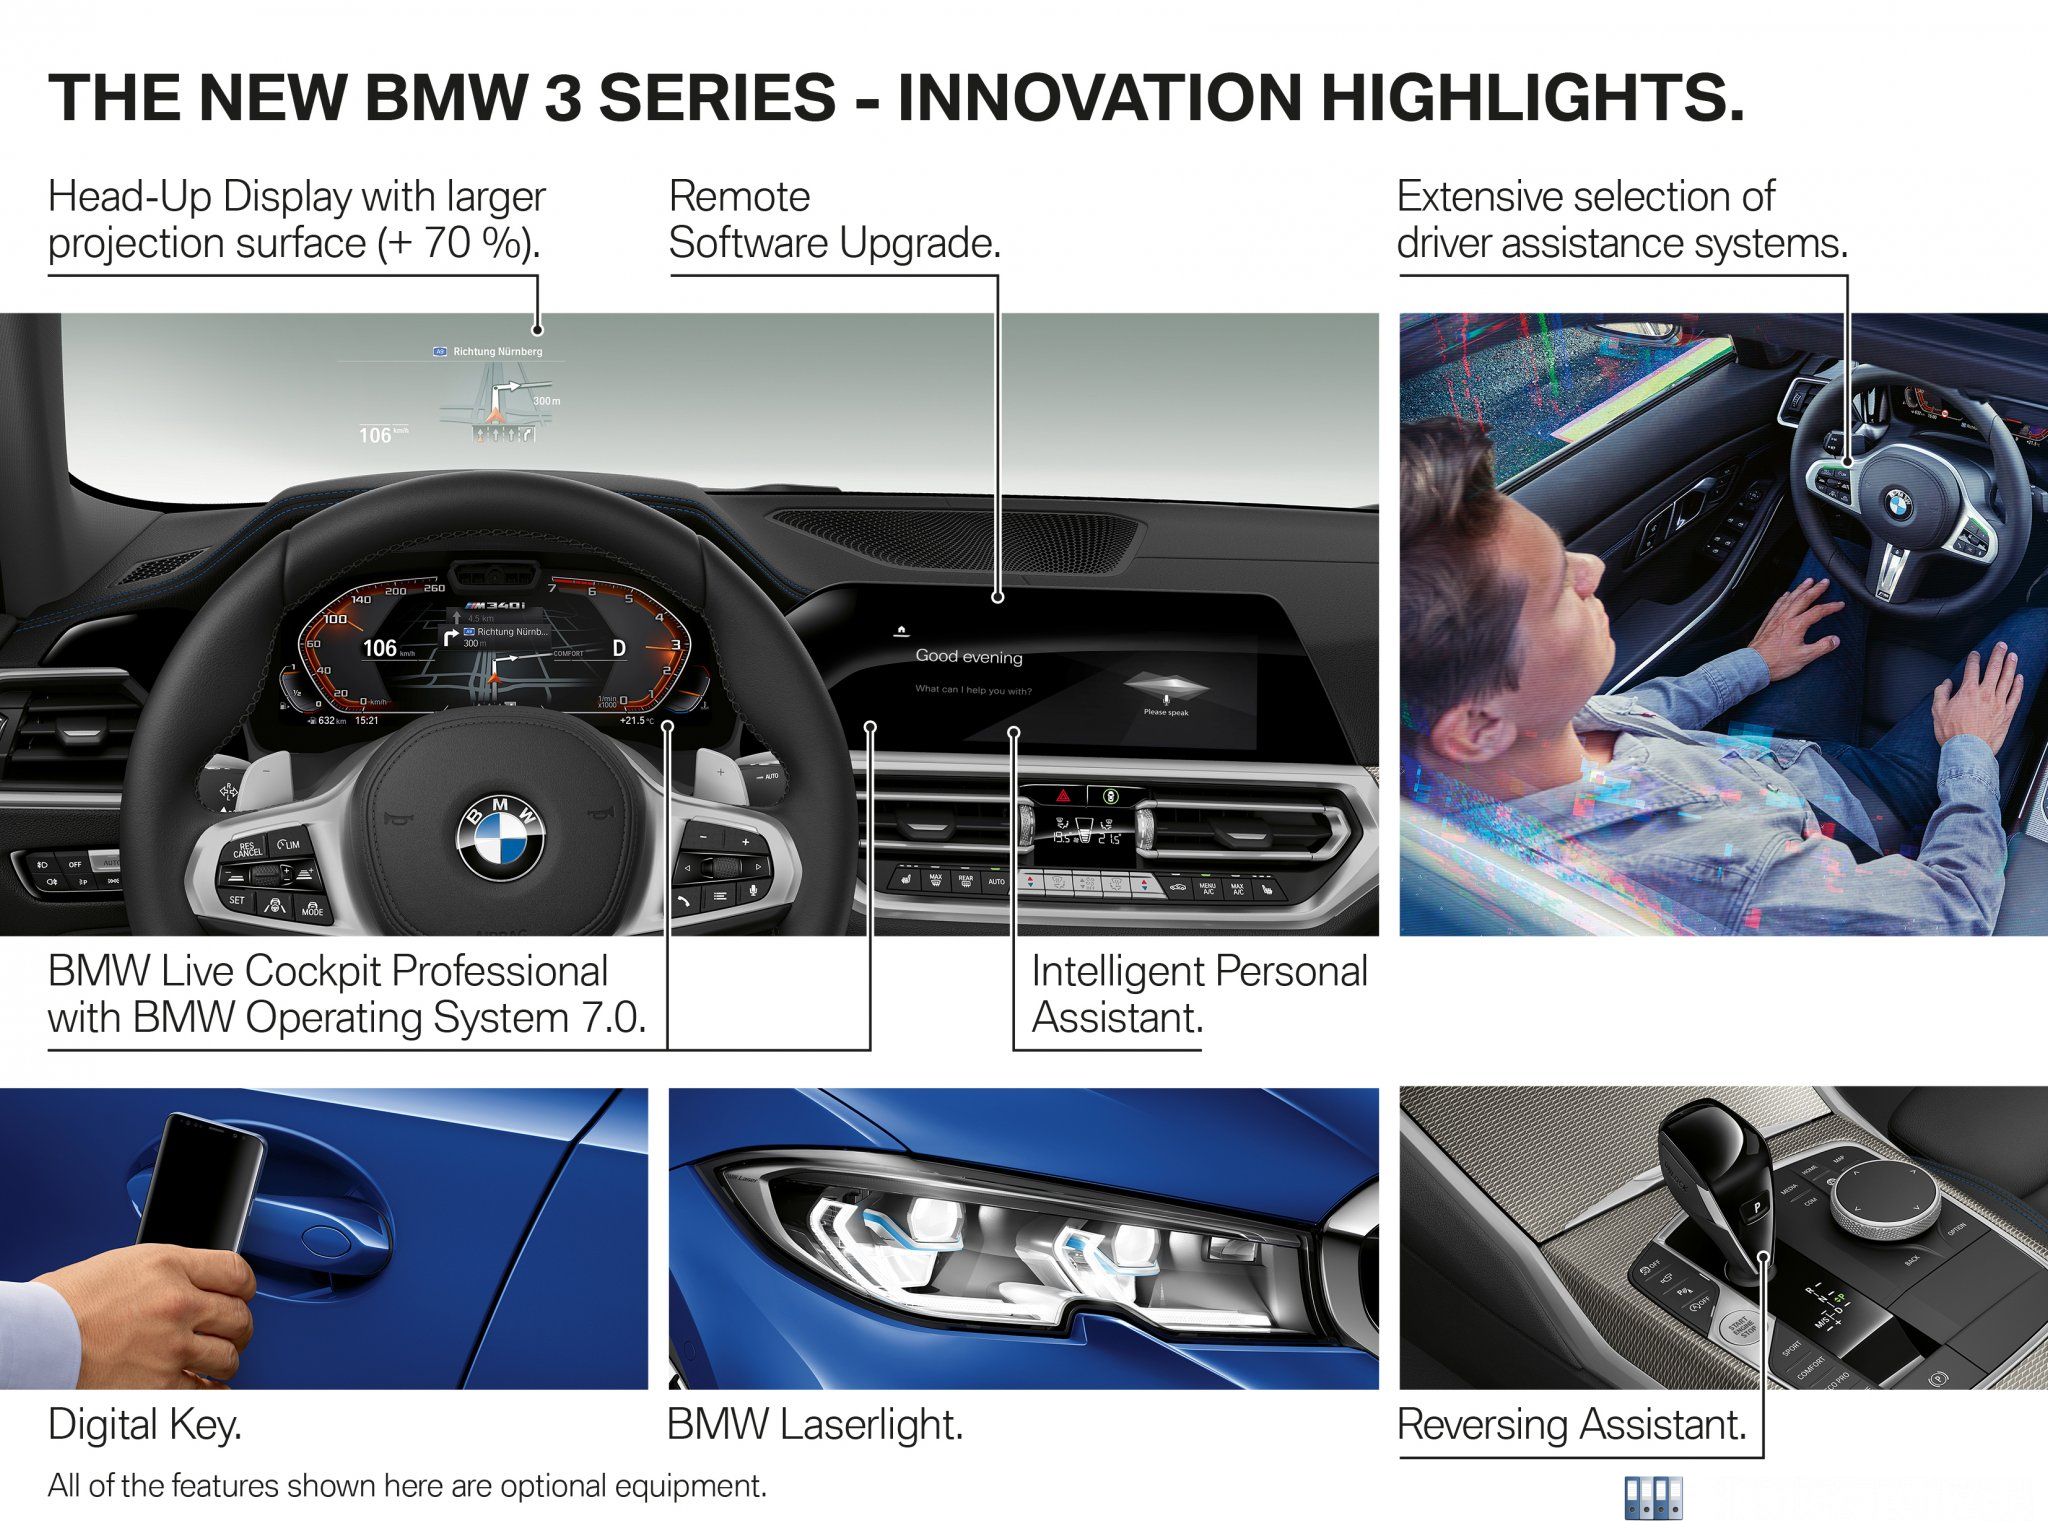 BMW 3 Series Sedan - Highlights